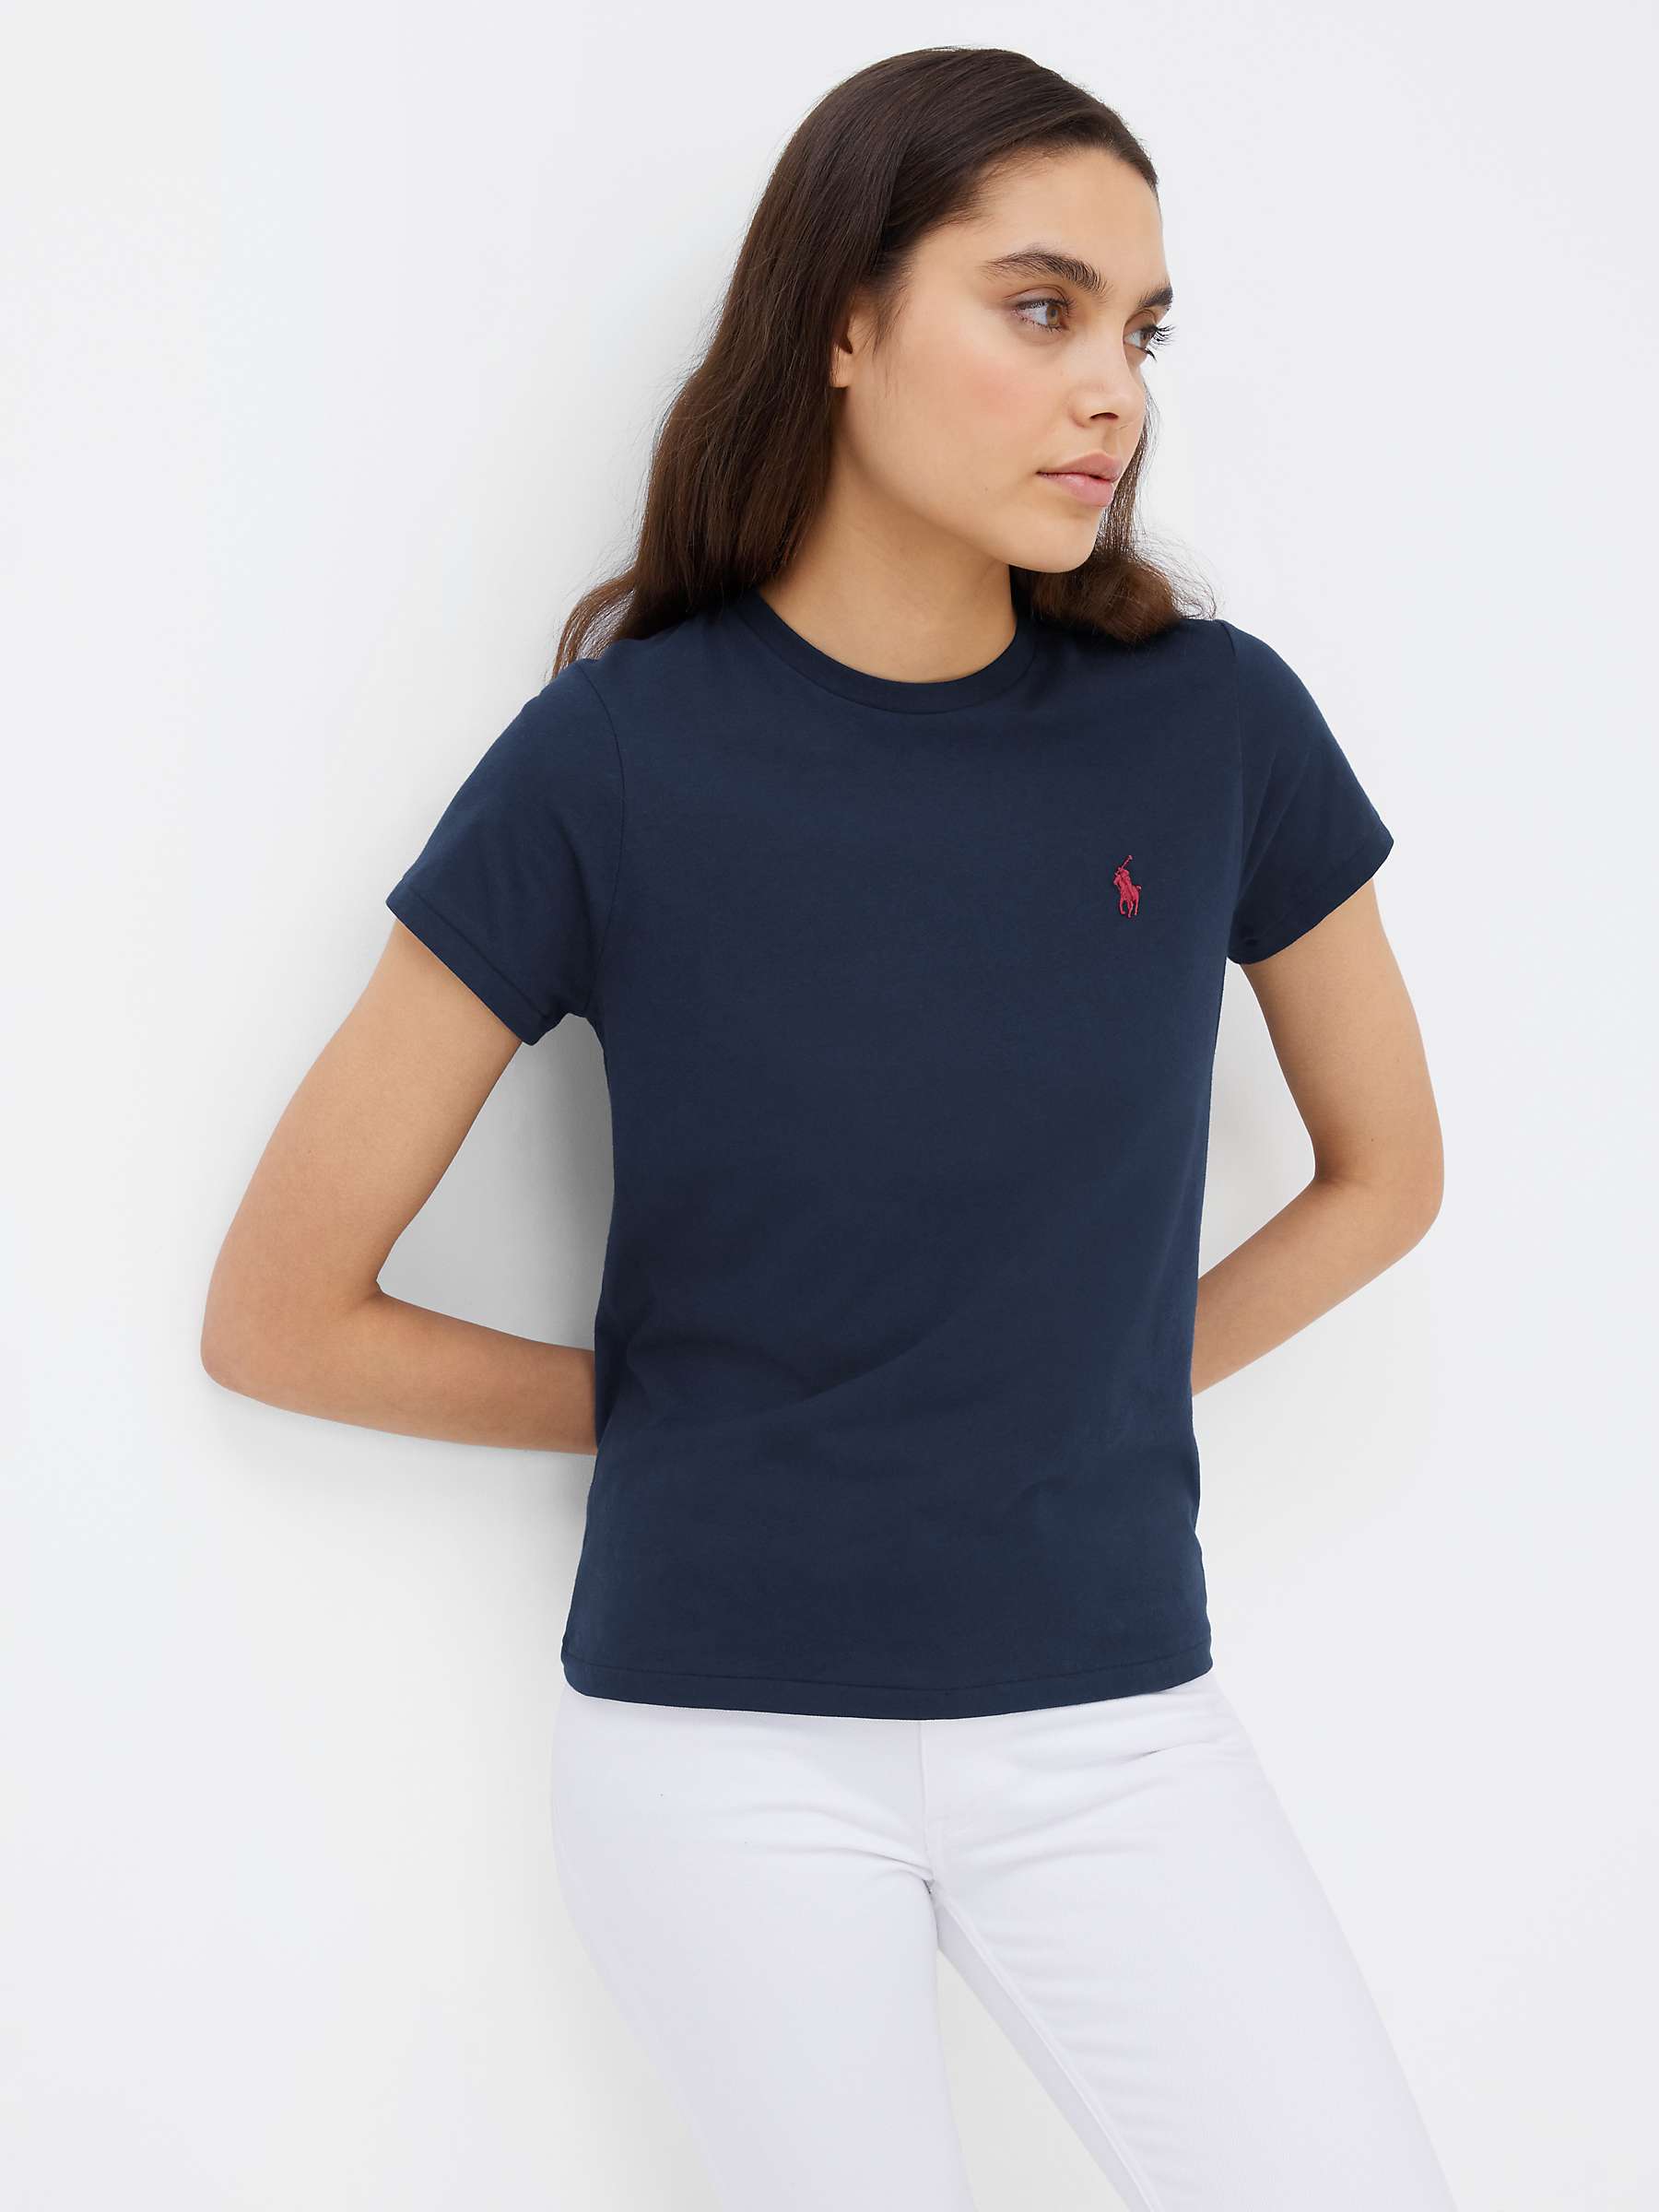 Buy Polo Ralph Lauren Logo Crew Neck Short Sleeve T-Shirt Online at johnlewis.com